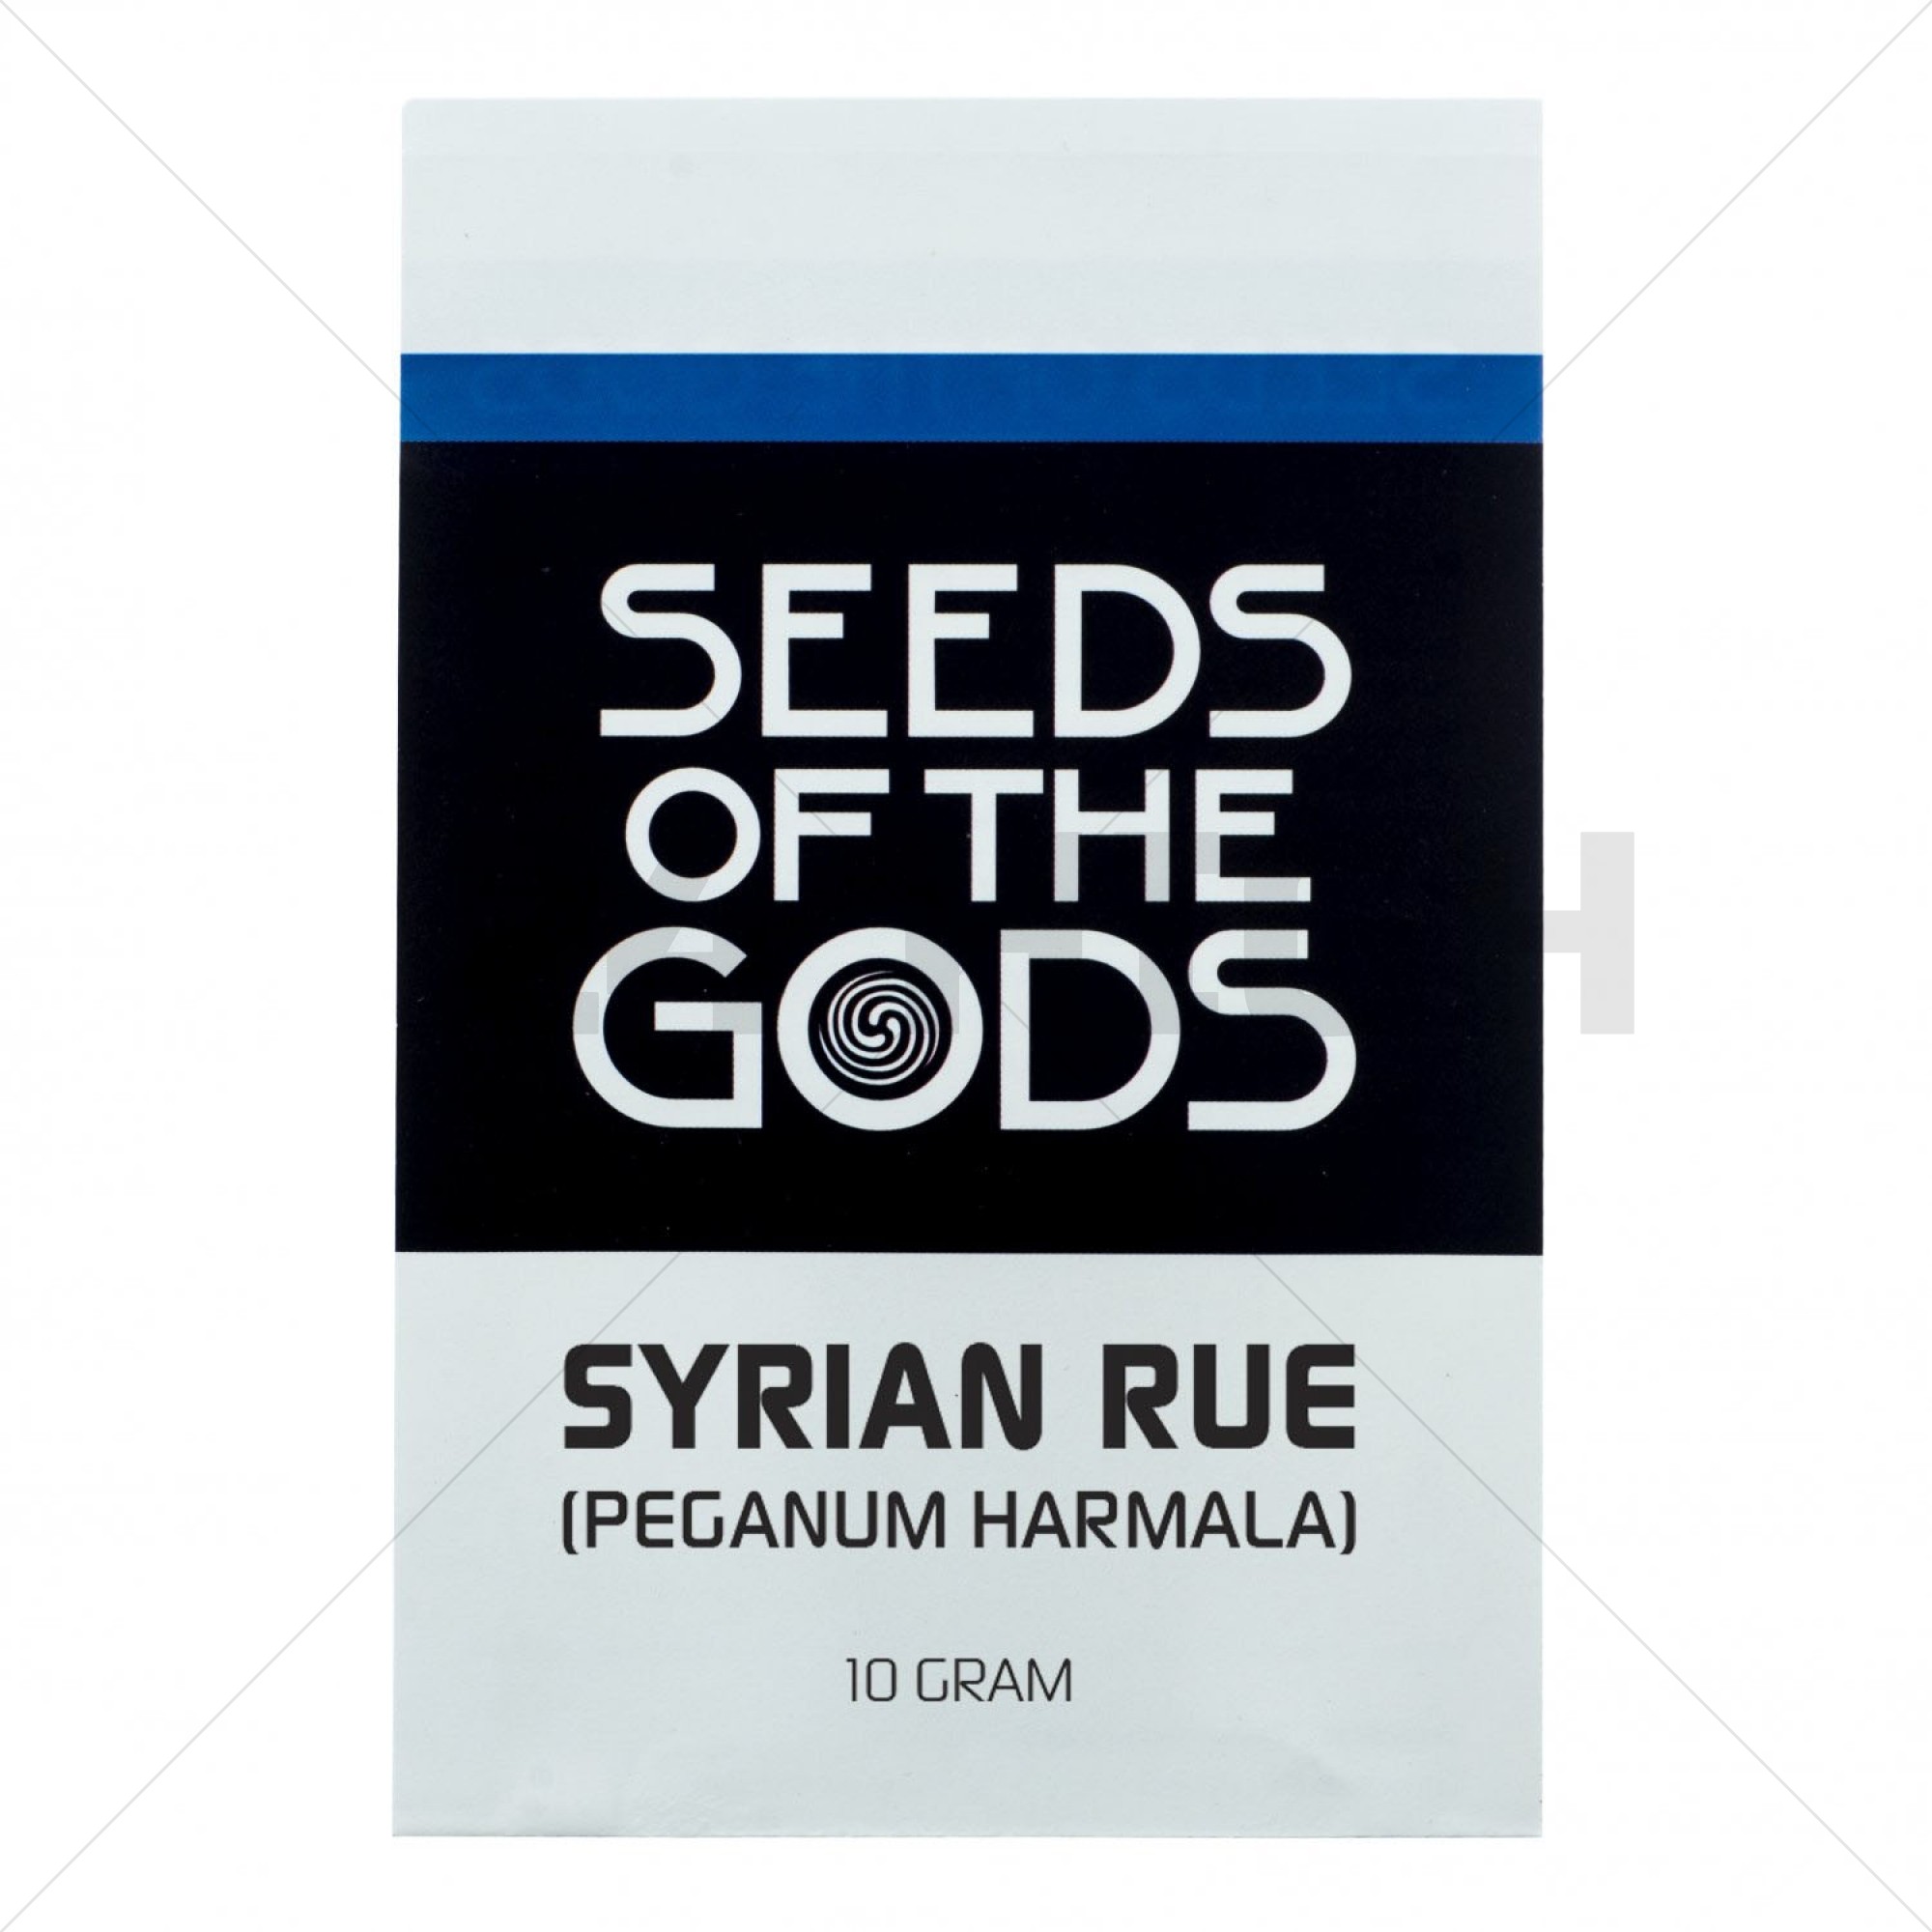 Rue syrienne (Peganum harmala) graines